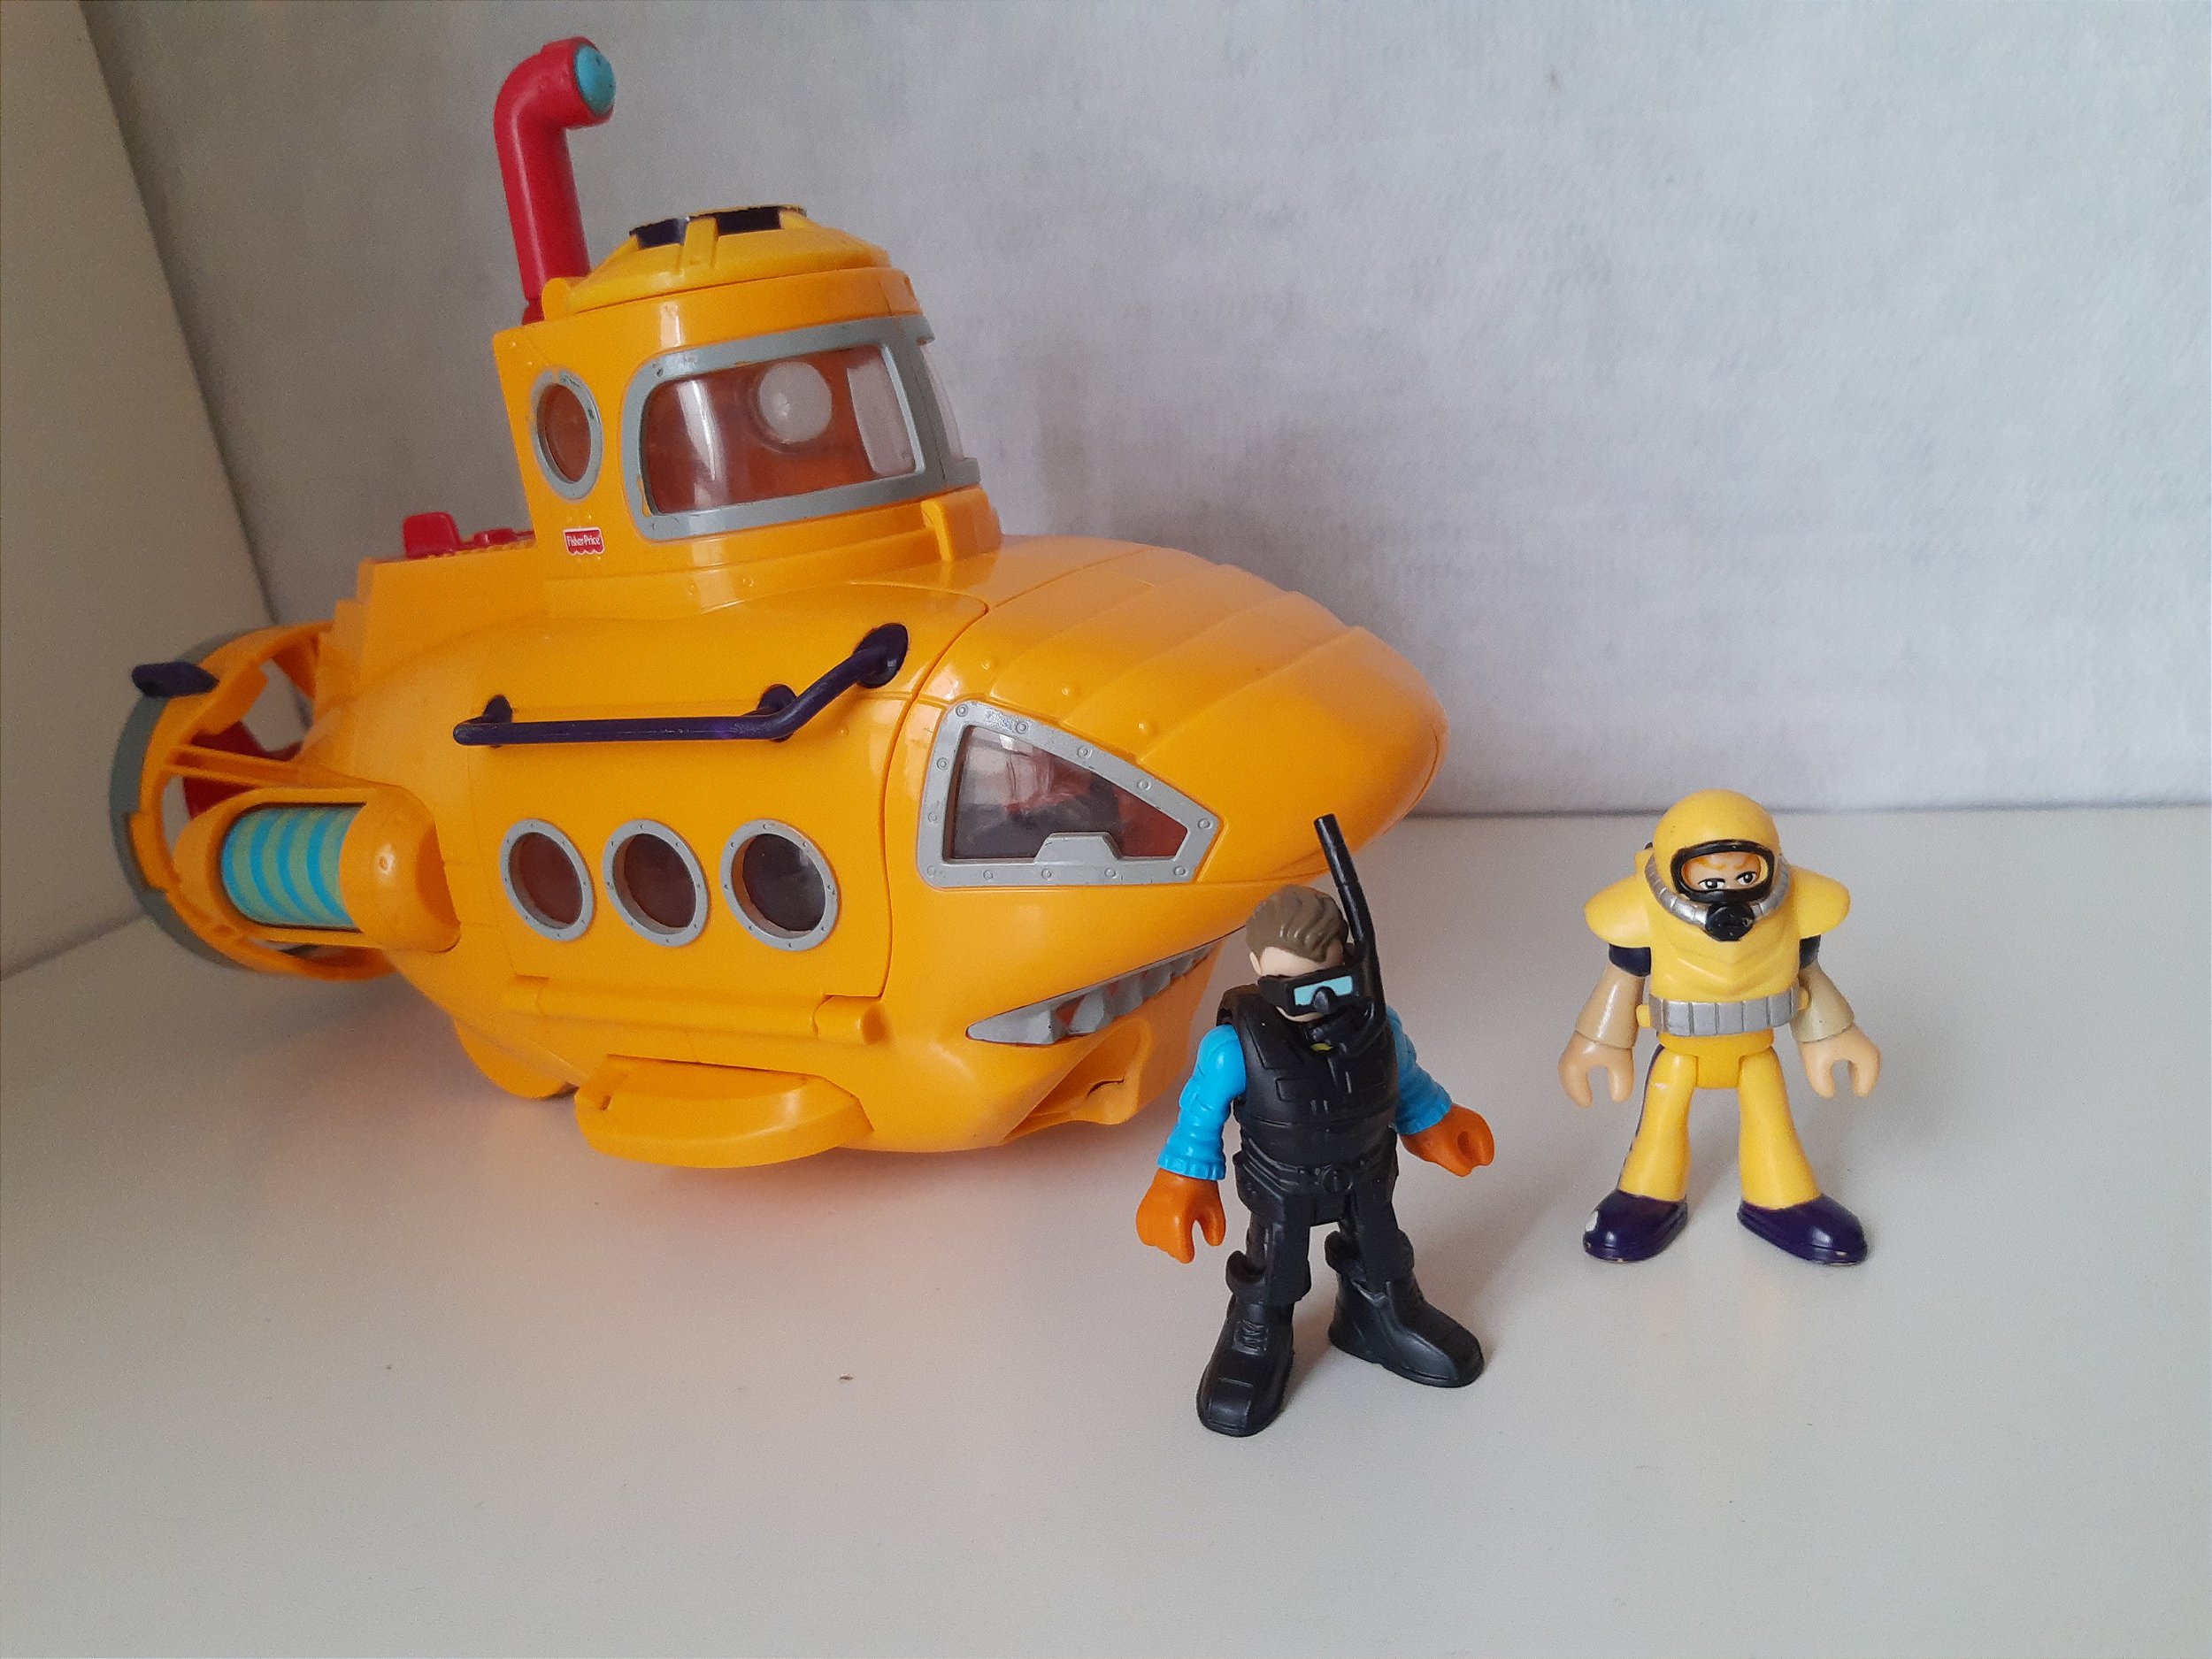 Brinquedos Pokemon Bonecos: comprar mais barato no Submarino